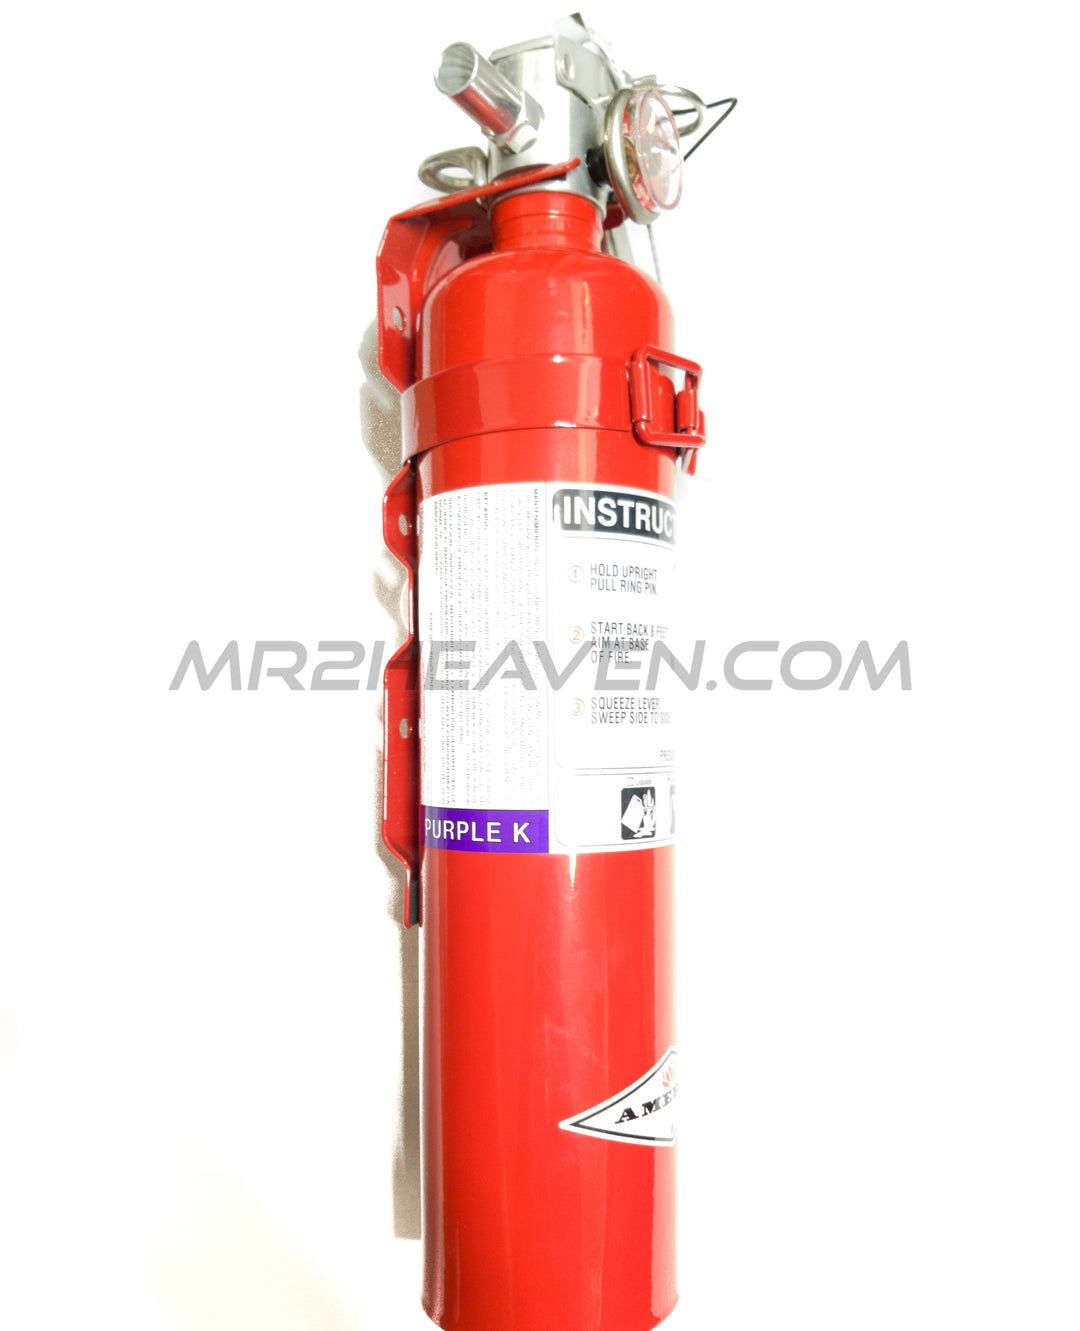 MR2Heaven Passenger Seat Fire Extinguisher Mount - MR2 Heaven